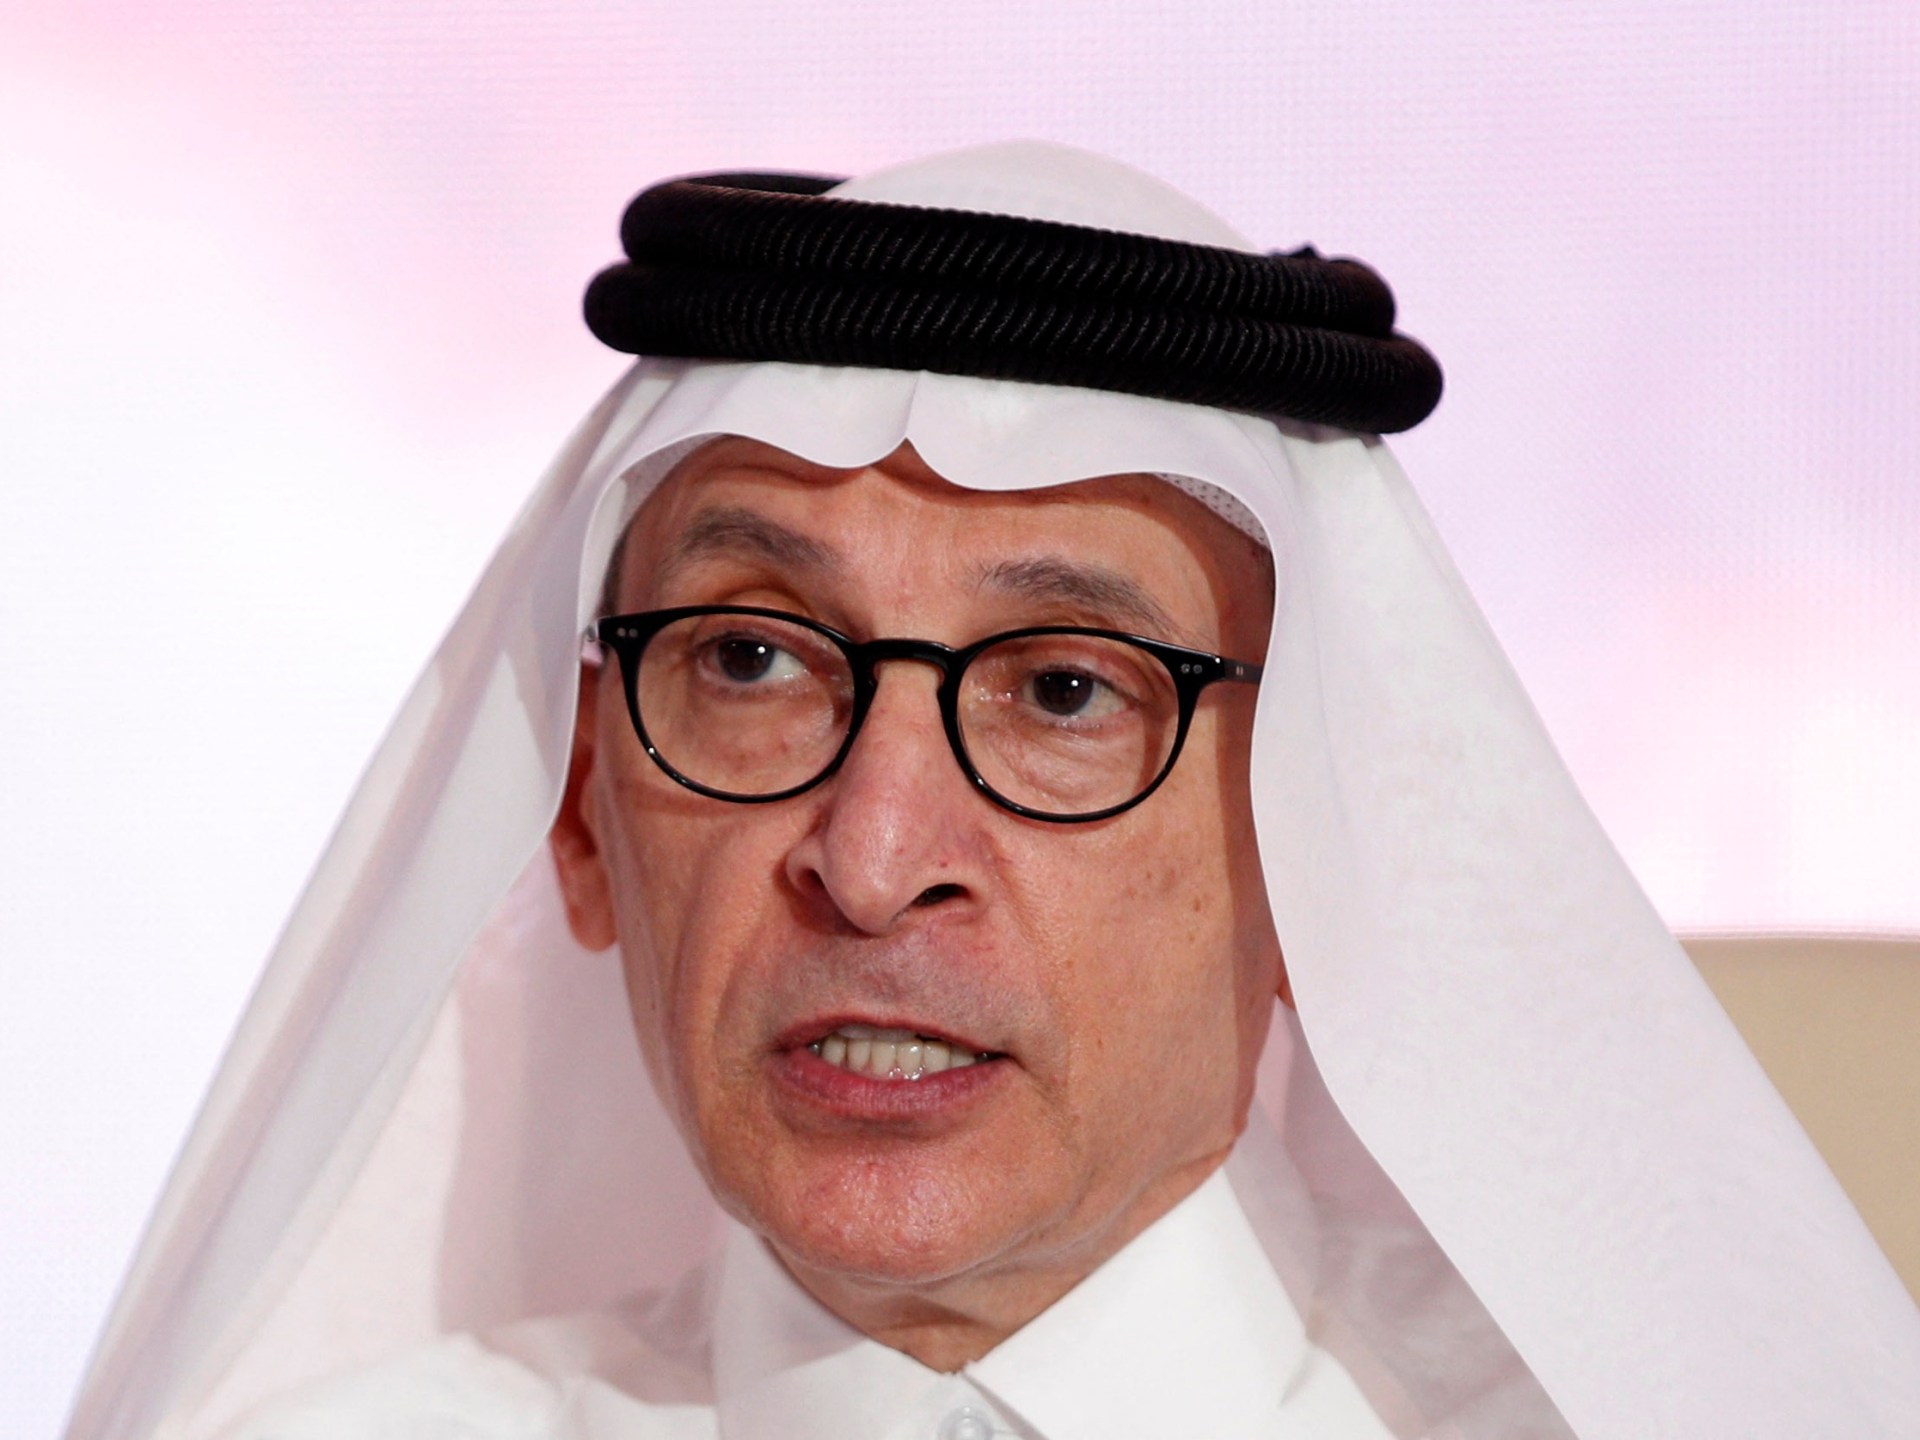 Qatar Airways CEO says Australian decision to block flights ‘very unfair’